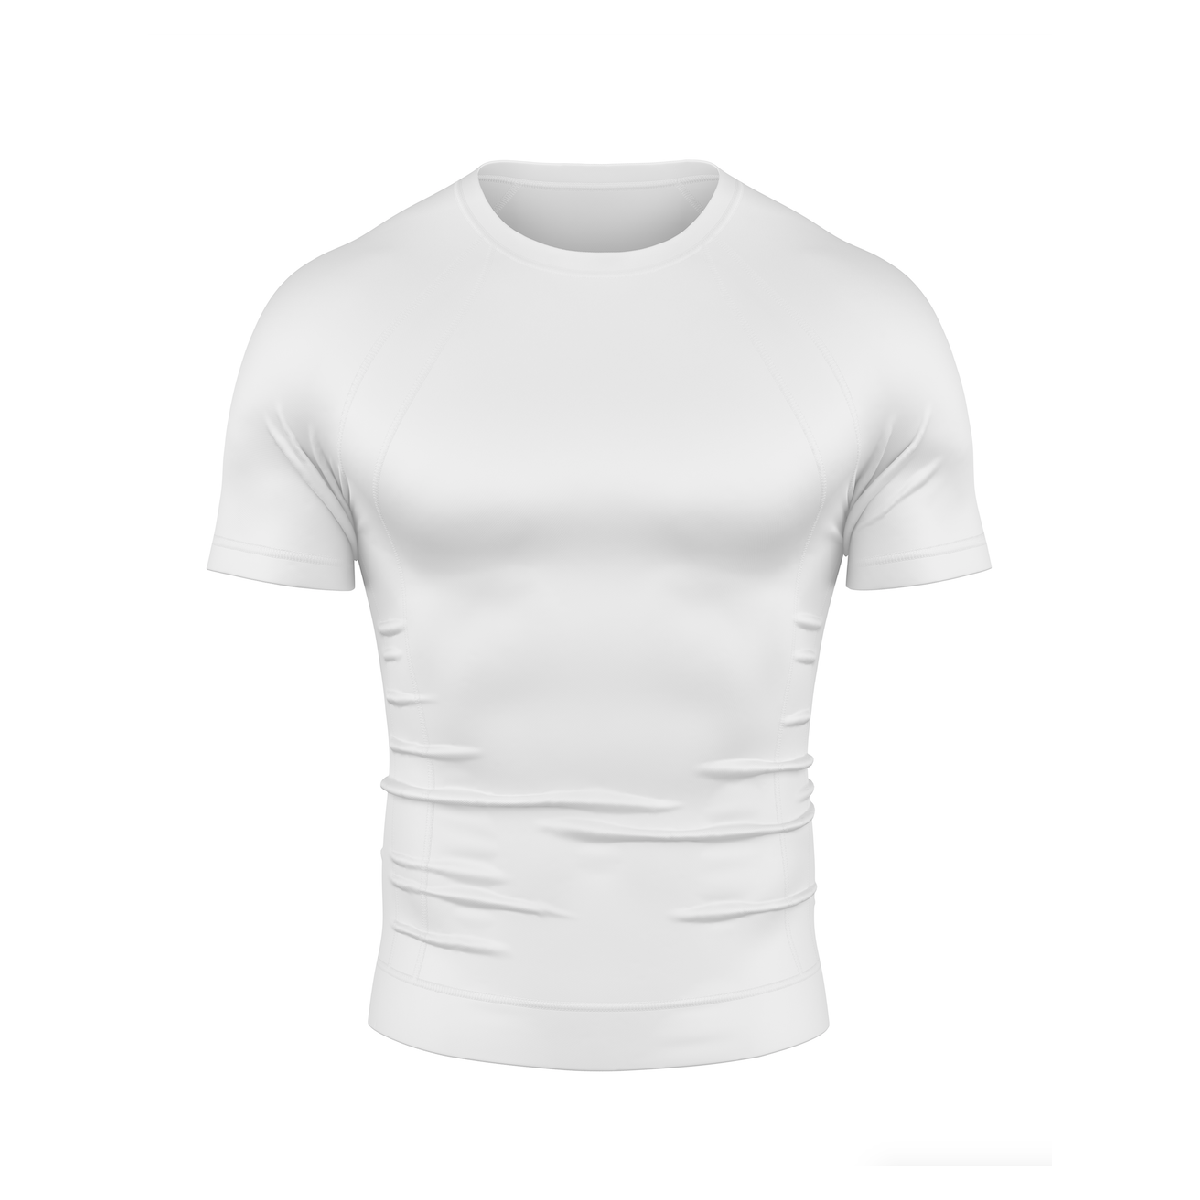 Unisex Short Sleeve Compression Shirt